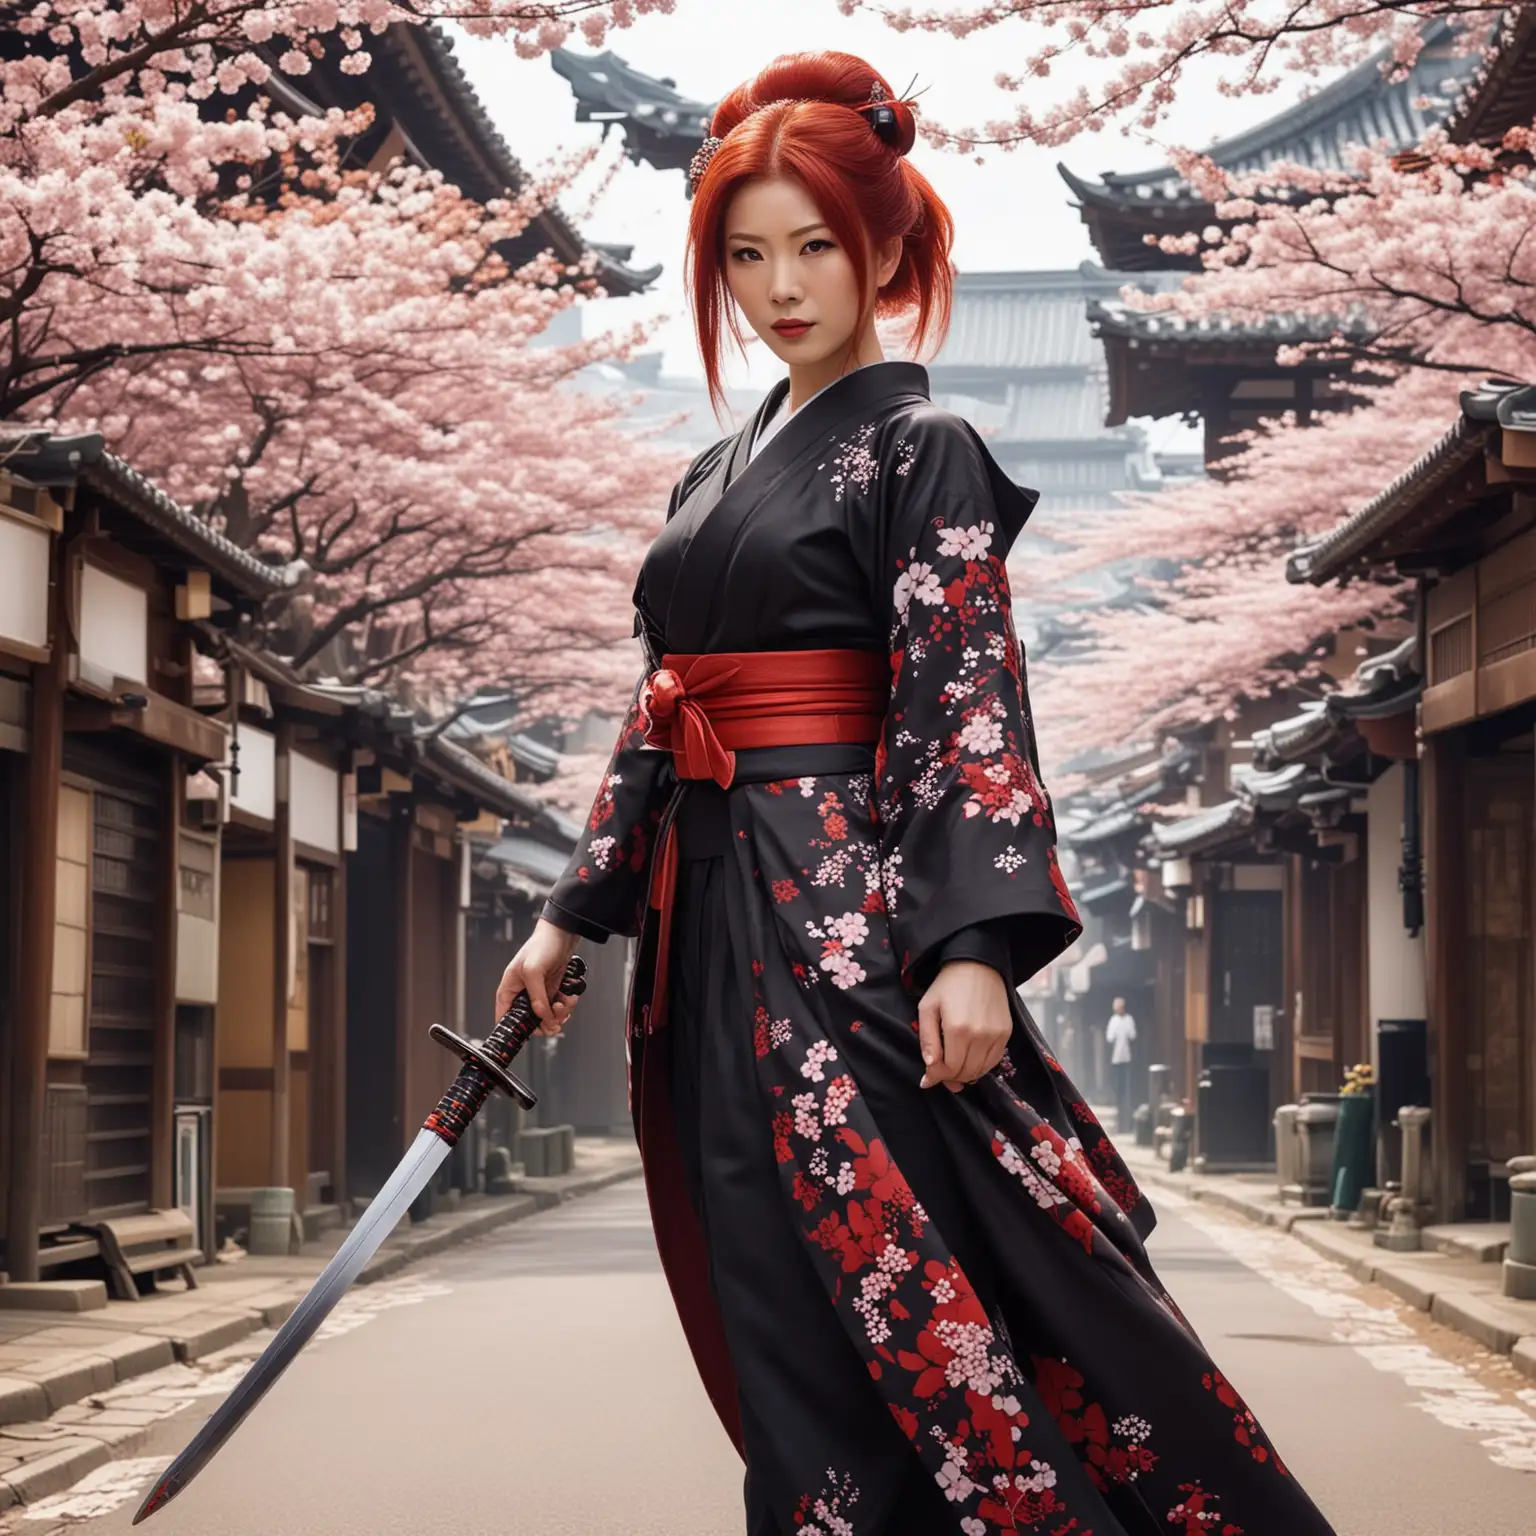 Confident Futuristic TechnoGeisha Swordswoman amidst Neo Edo Blossoms